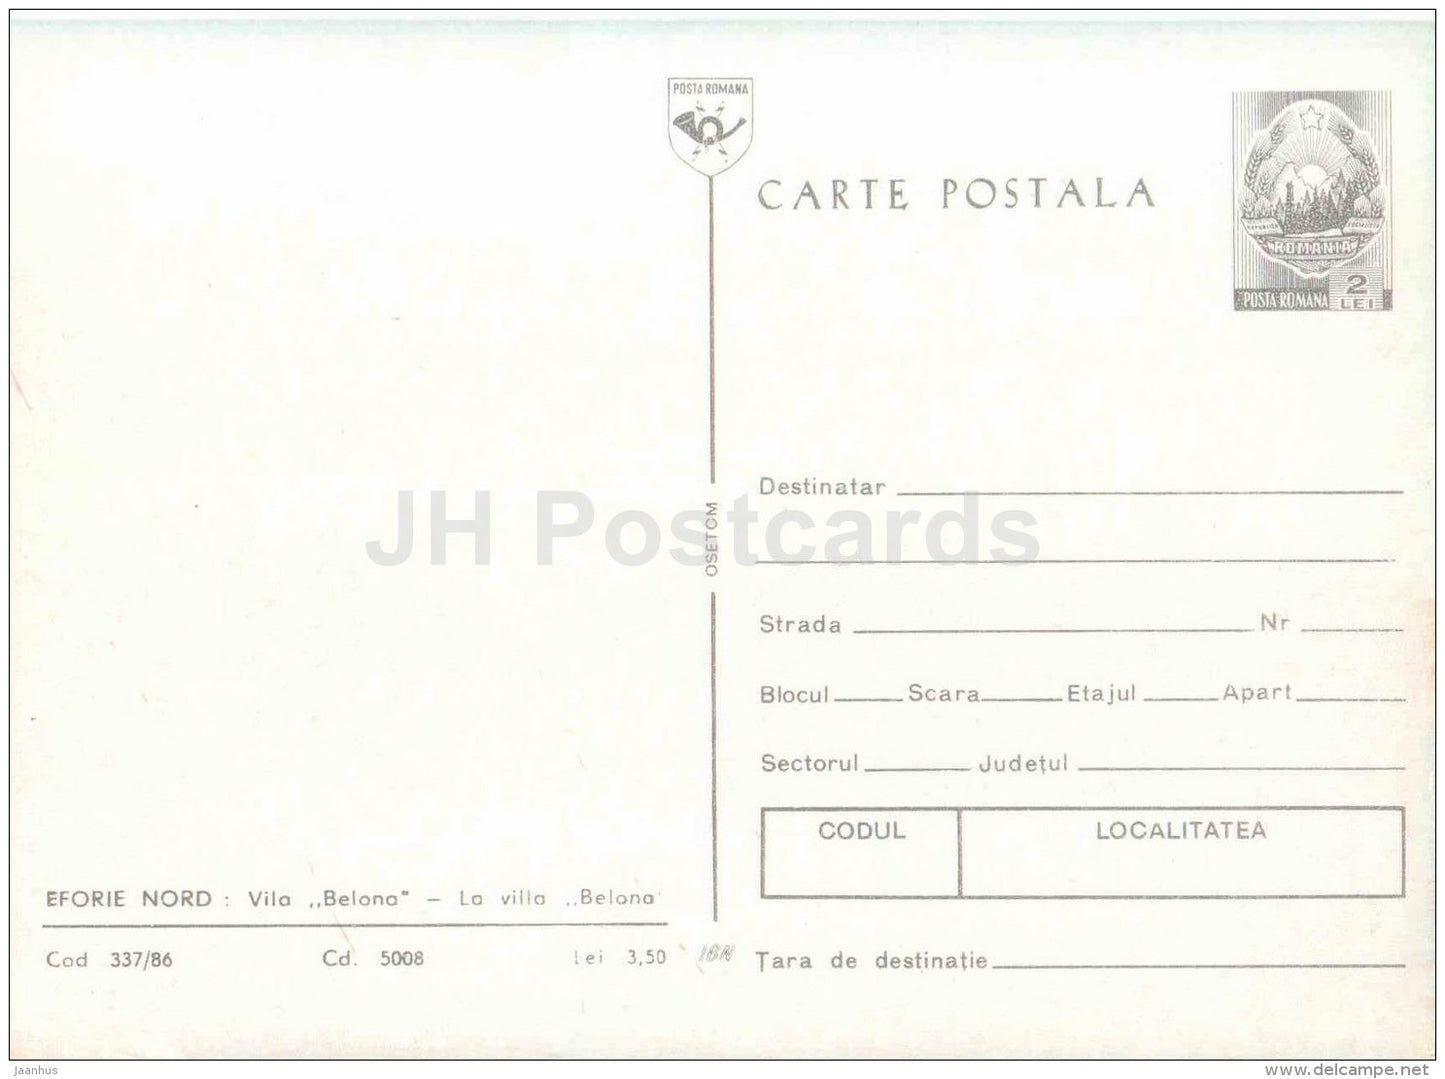 Eforie Nord - villa Belona - beach - boat - postal stationery - Romania - unused - JH Postcards